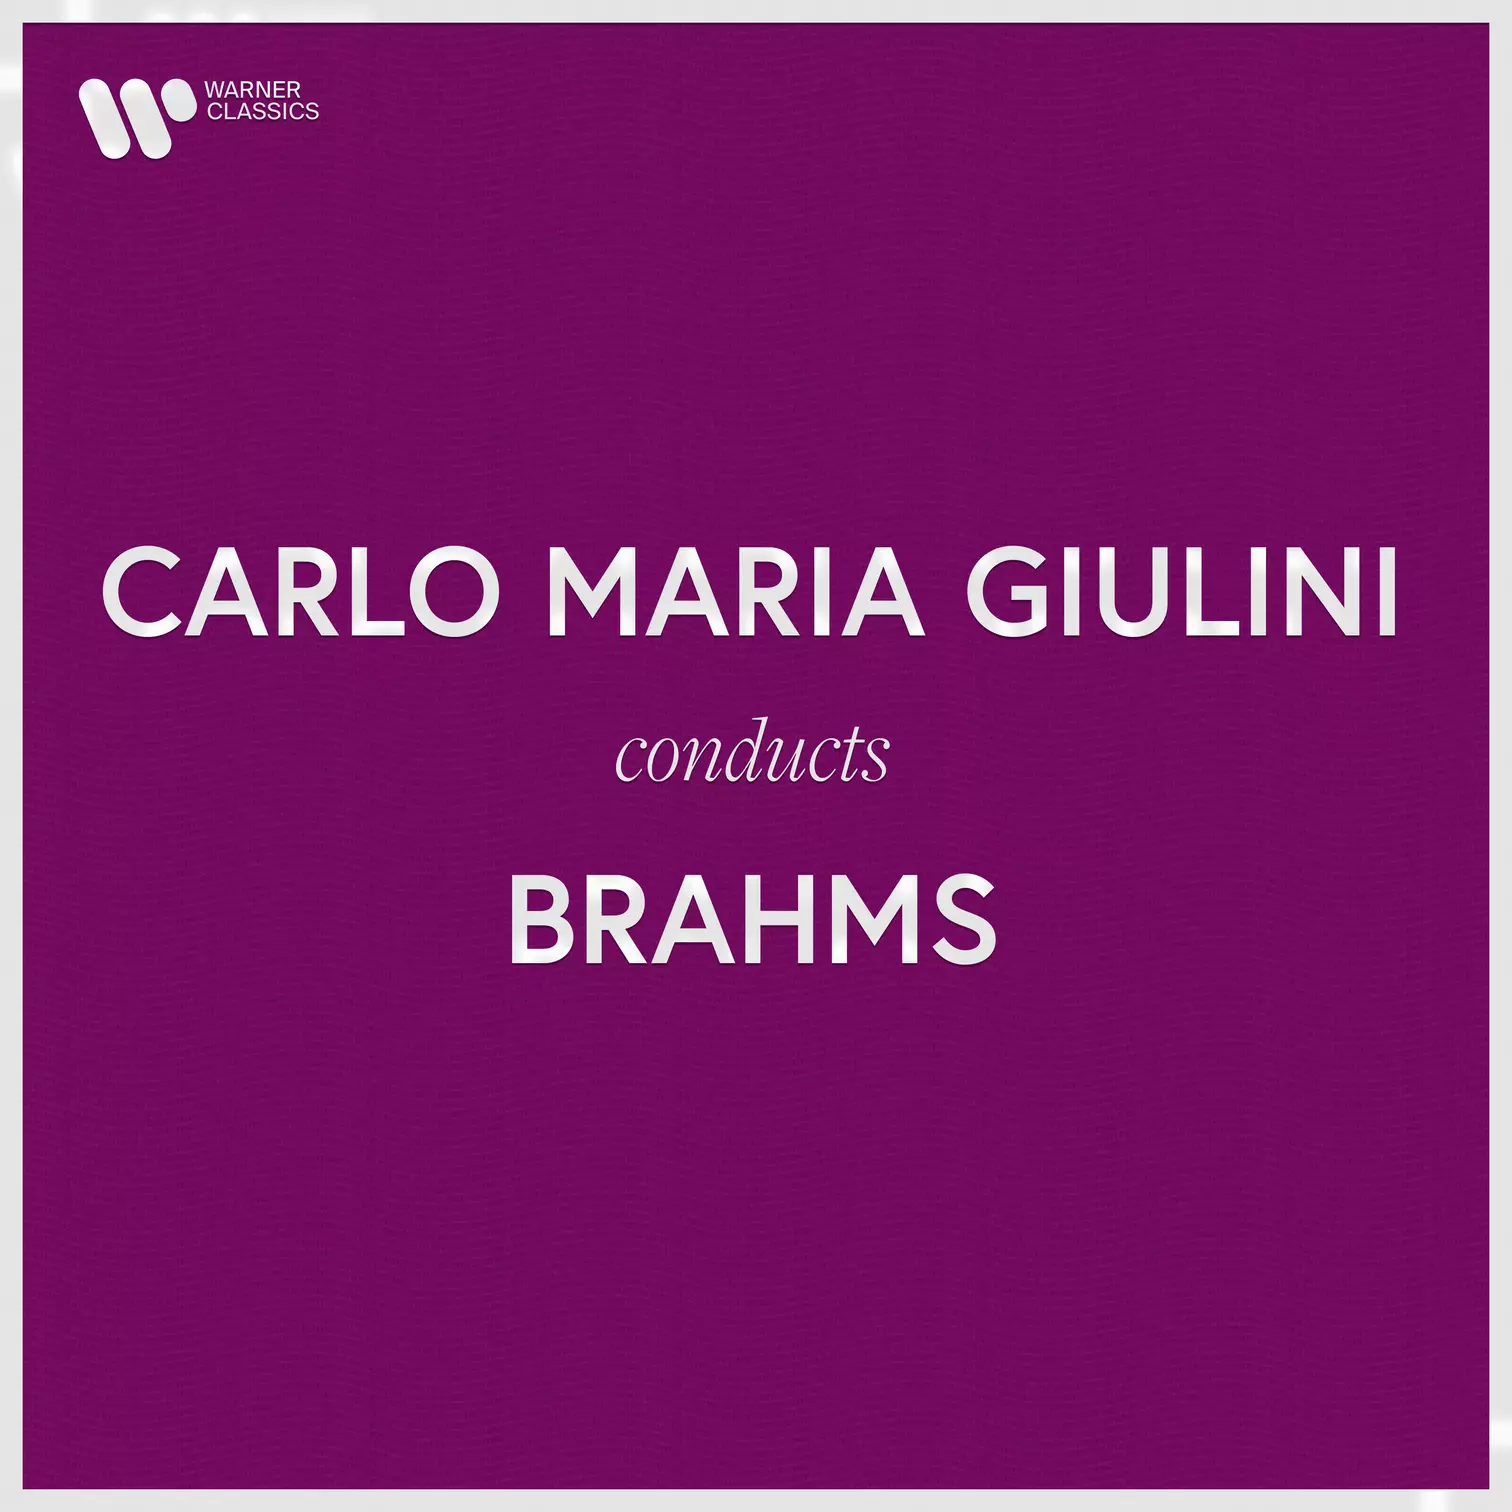 Carlo Maria Giulini Conducts Brahms